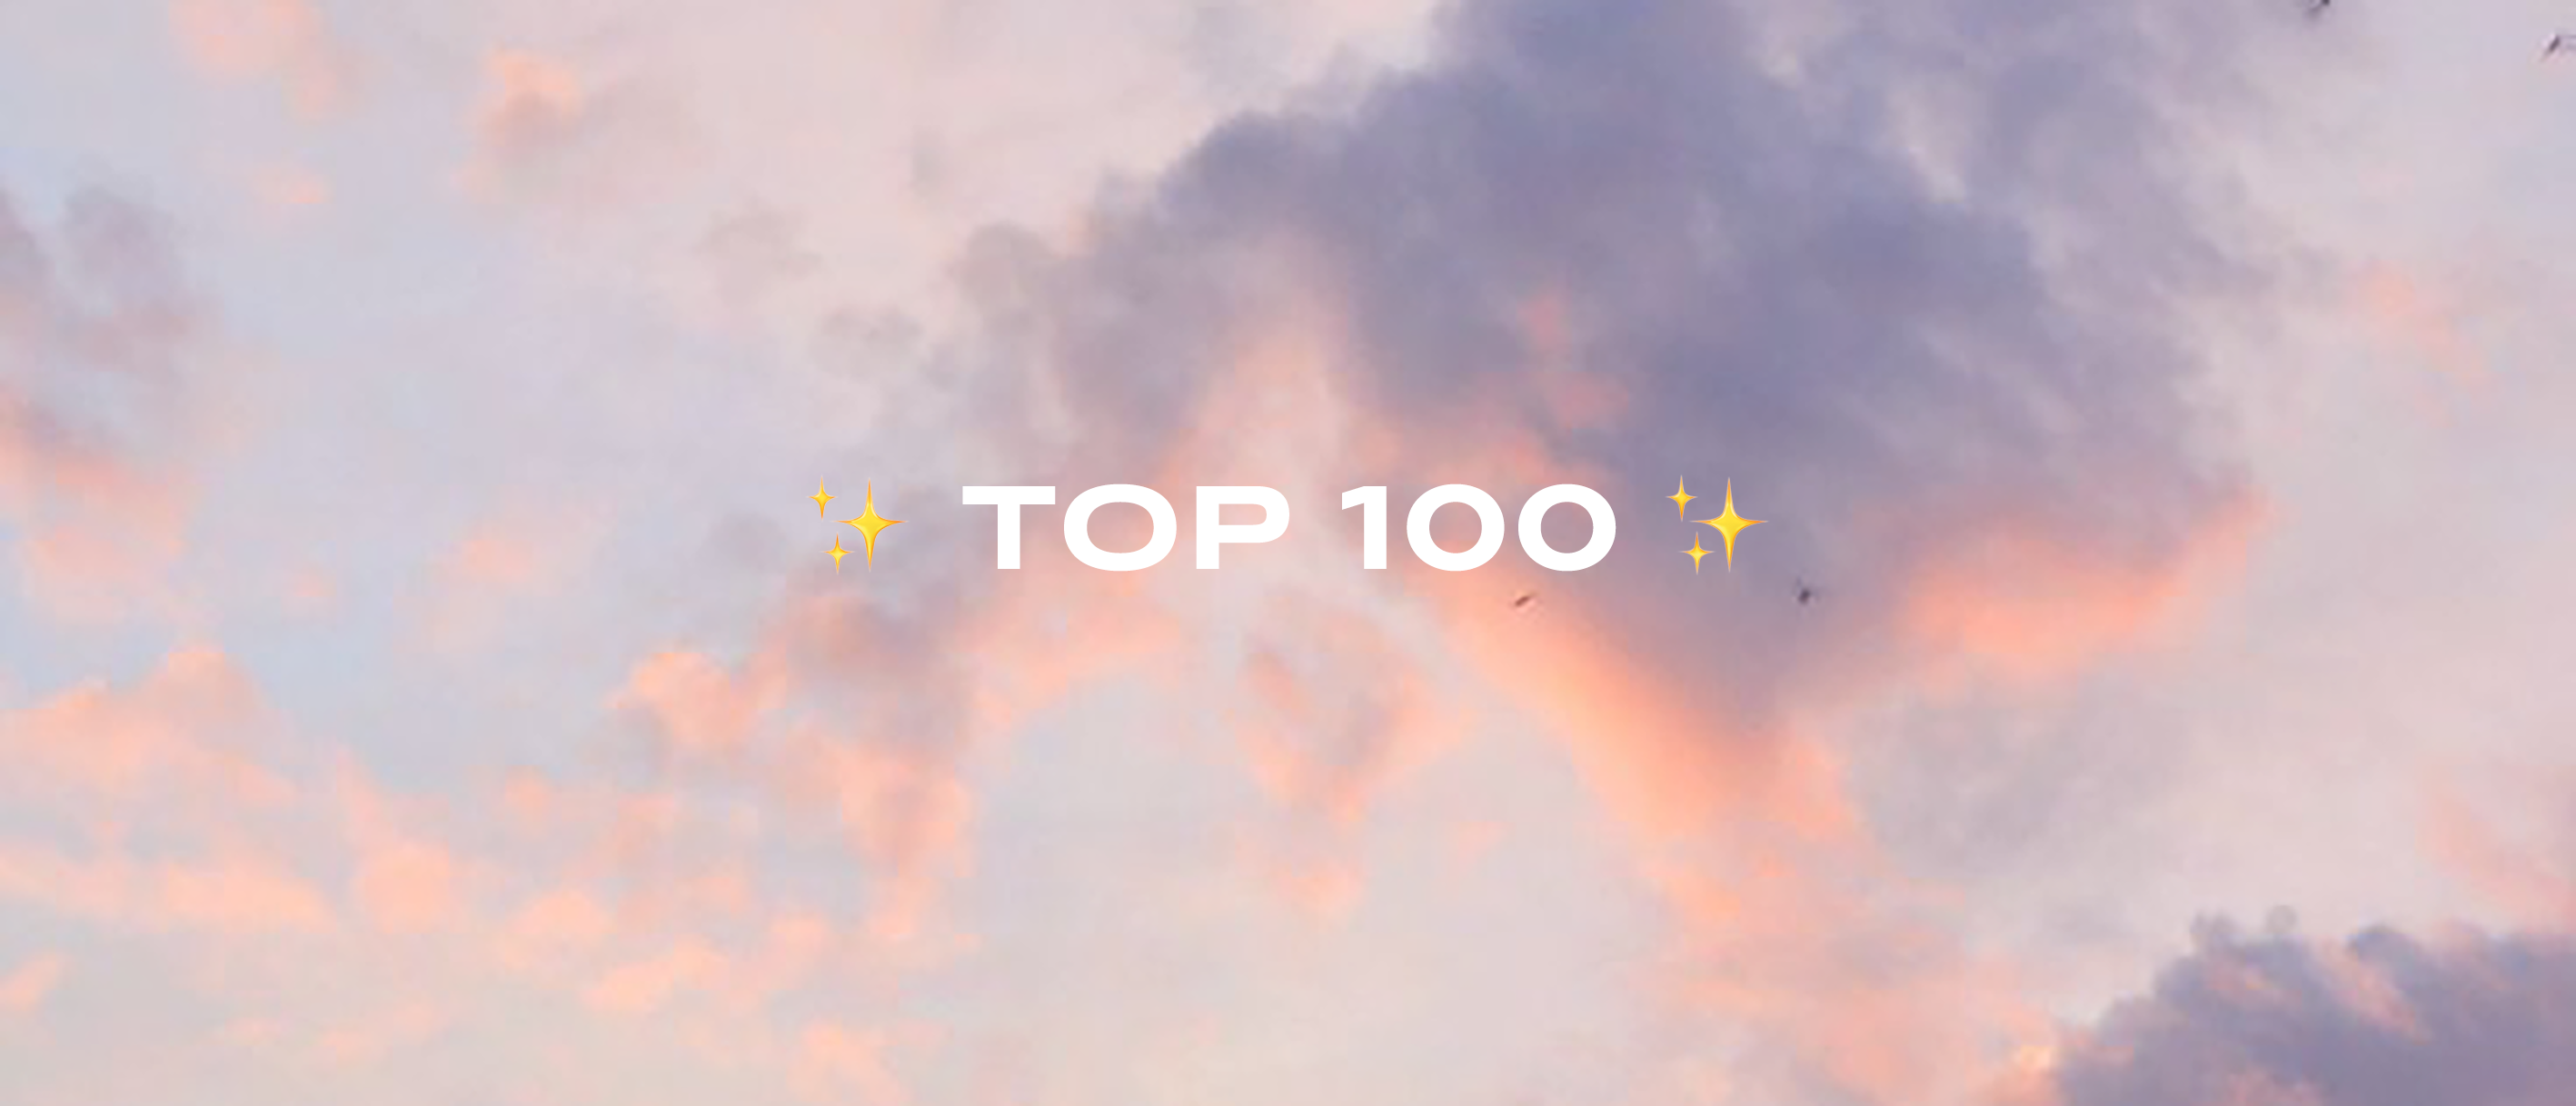 MY TOP 100